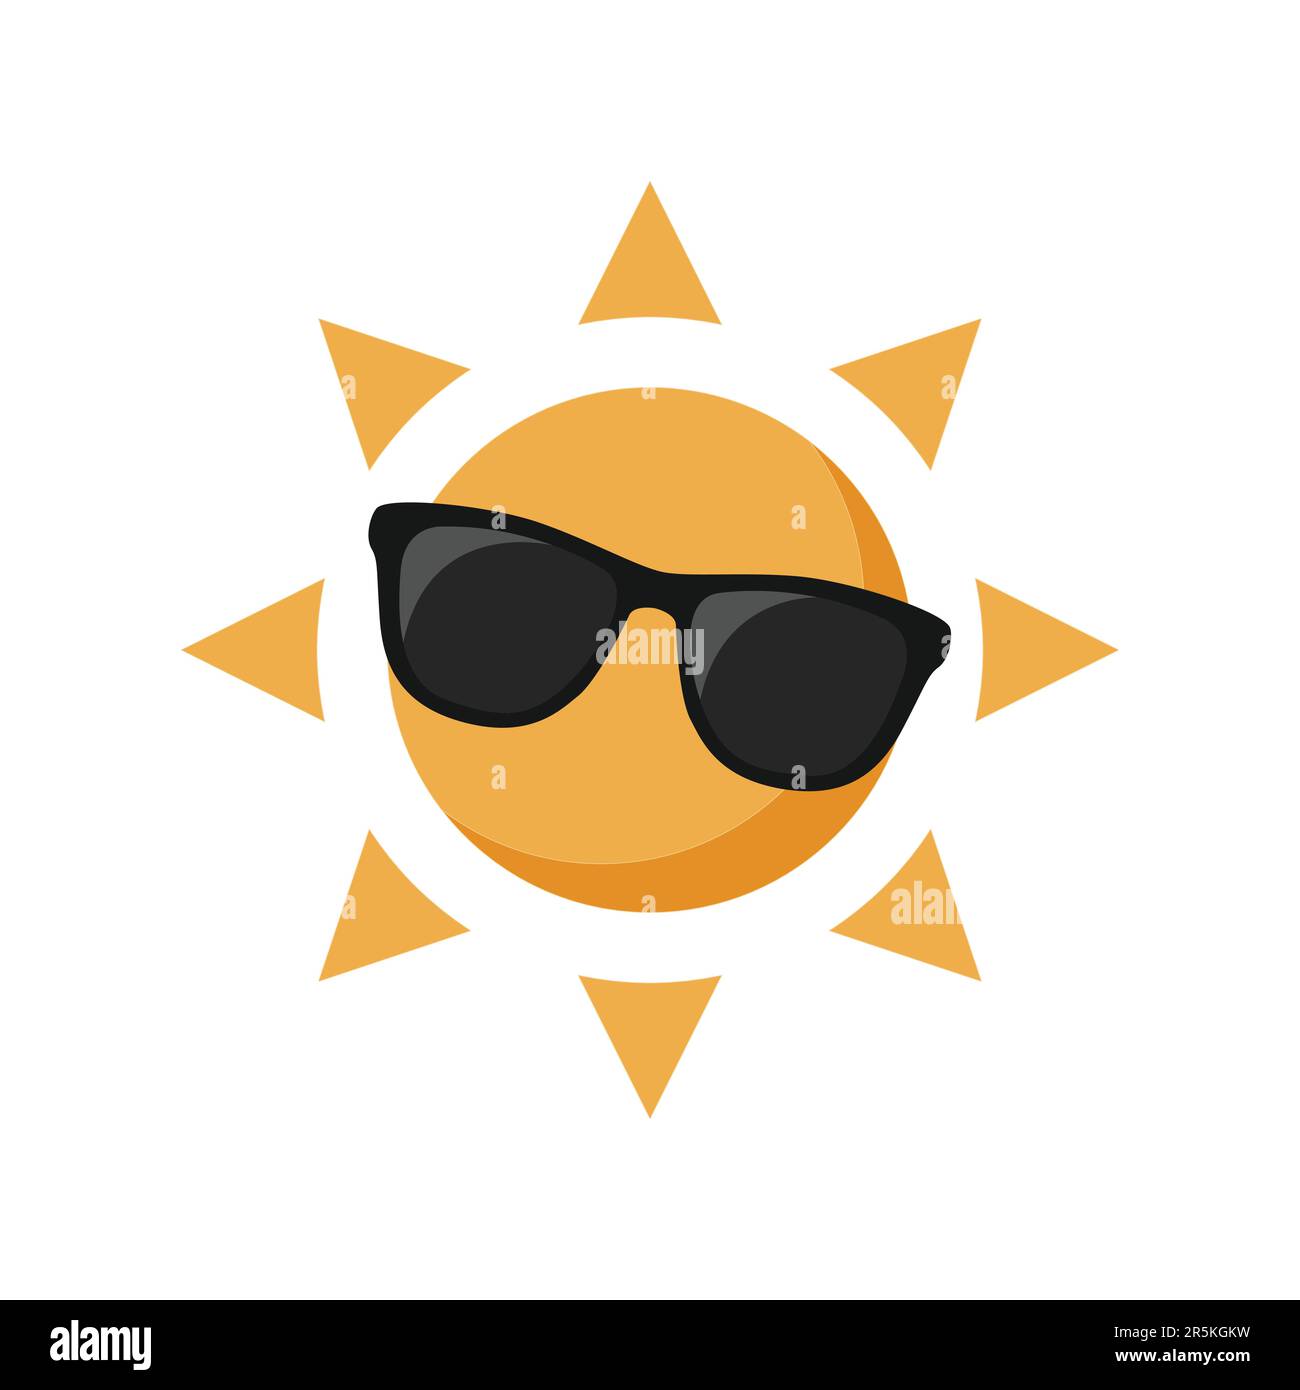 Illustration Heartshaped Sun Wearing Sunglasses Stock Vector (Royalty Free)  2322573487 | Shutterstock